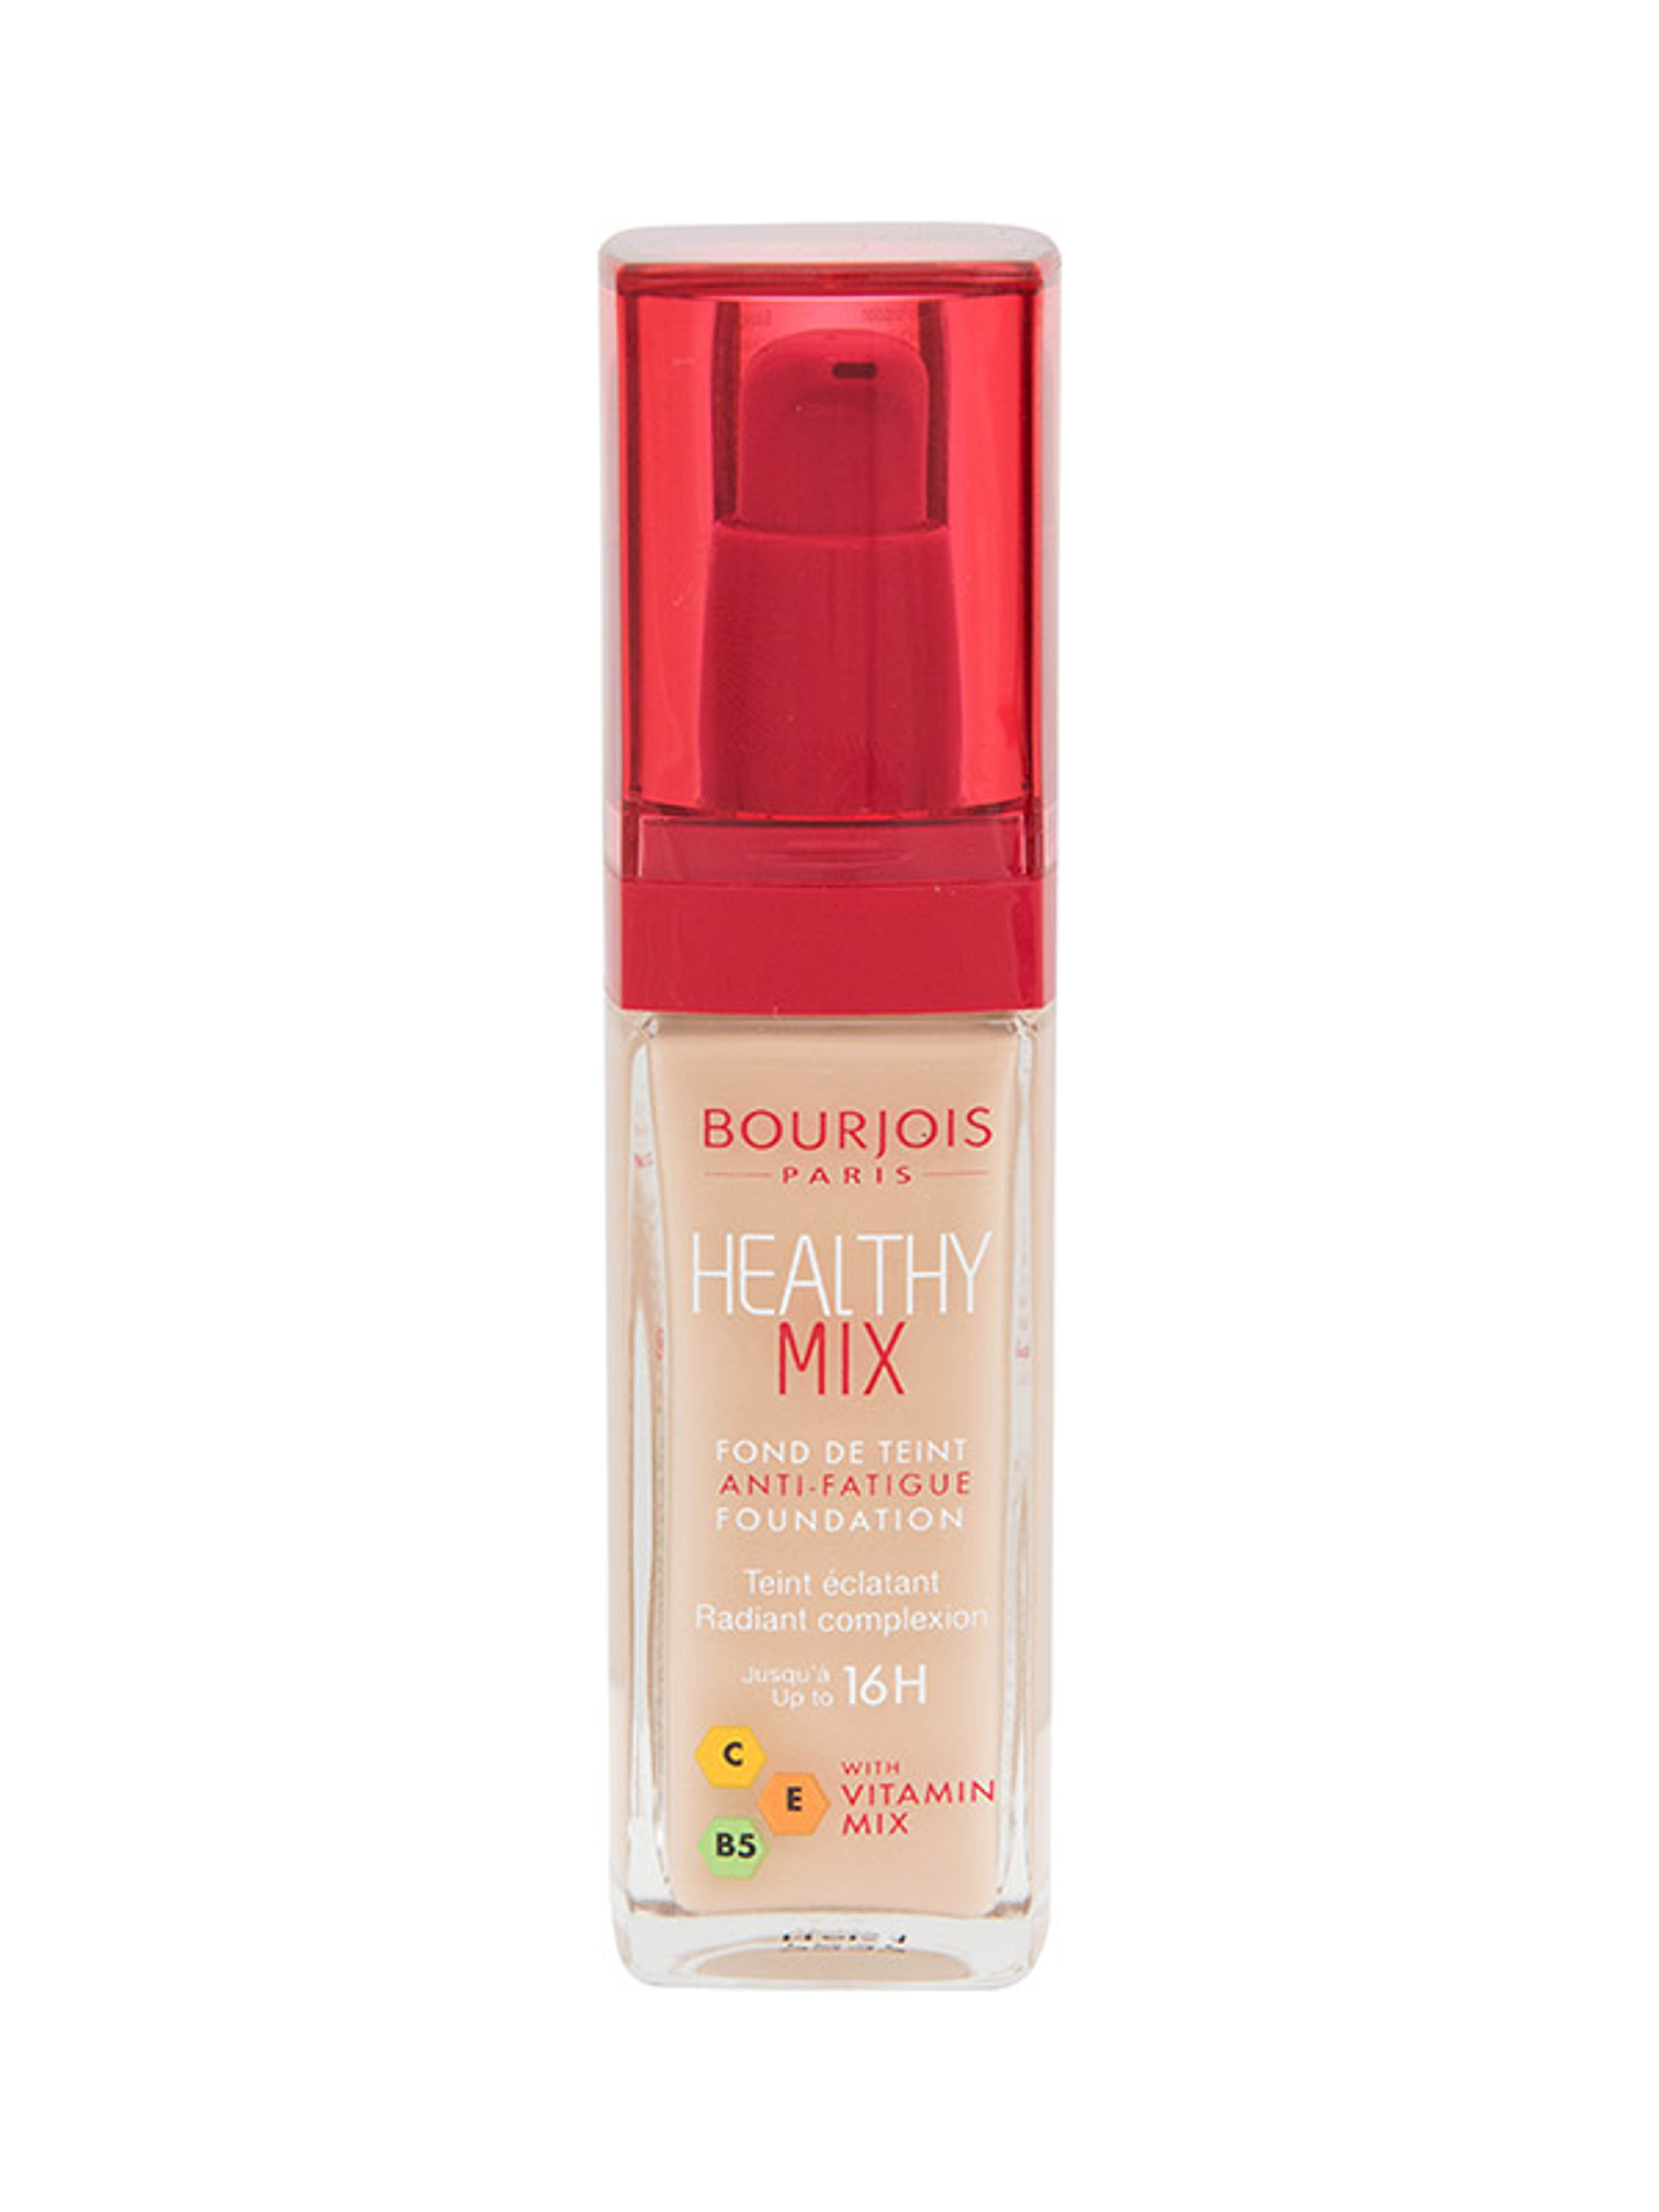 Bourjois alapozó healthy mix /51 - 1 db-1